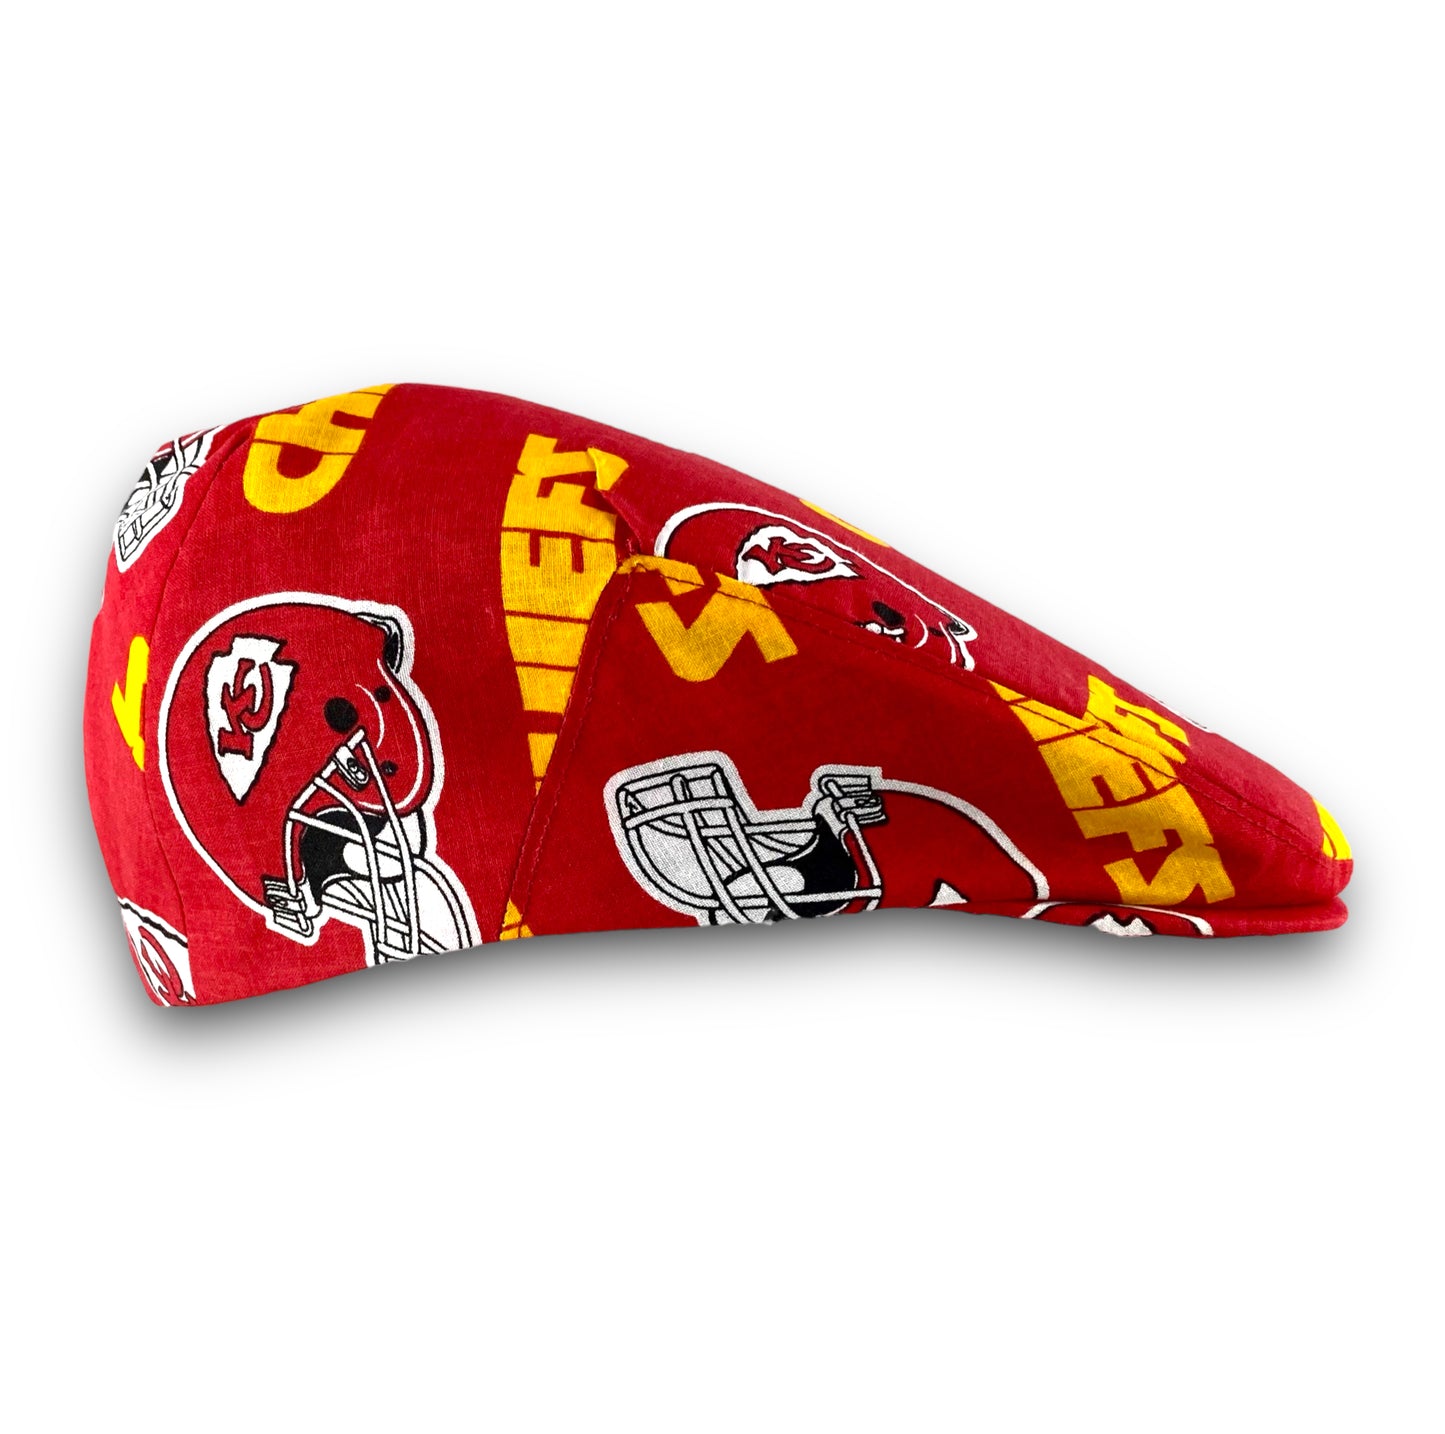 Custom Handmade Jeff Cap in Kansas City Chiefs Logo Print Fabric